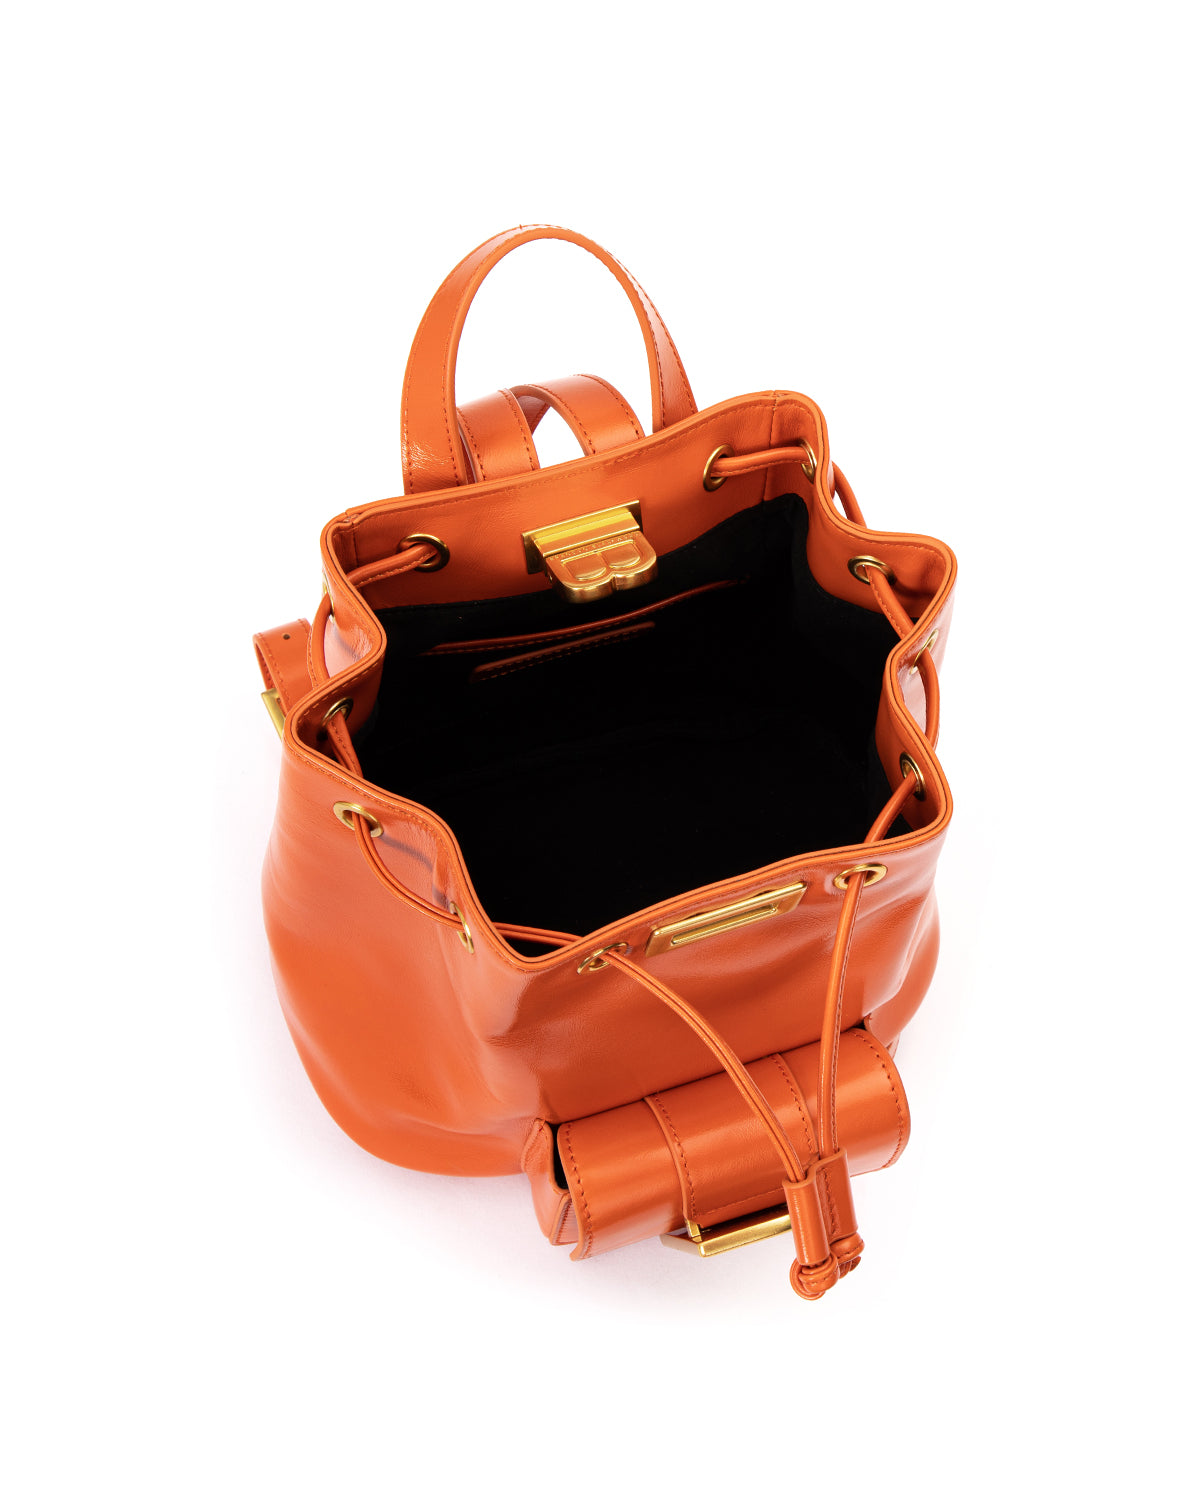 Brandon Blackwood New York - Midori Bag - Orange Oil Leather